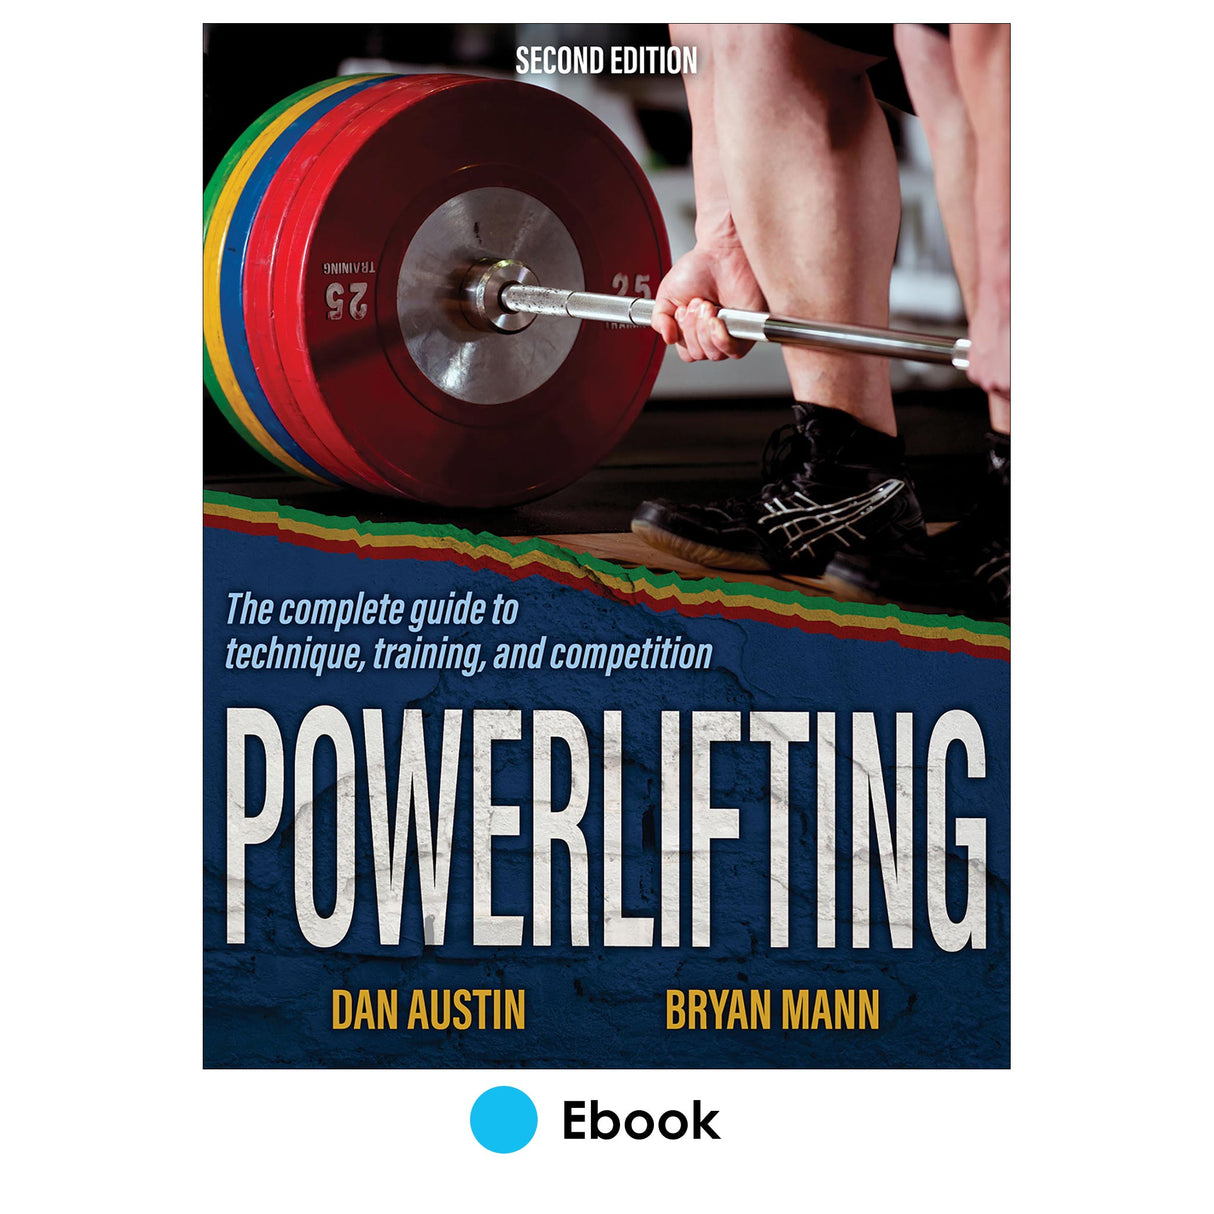 Powerlifting 2nd Edition epub